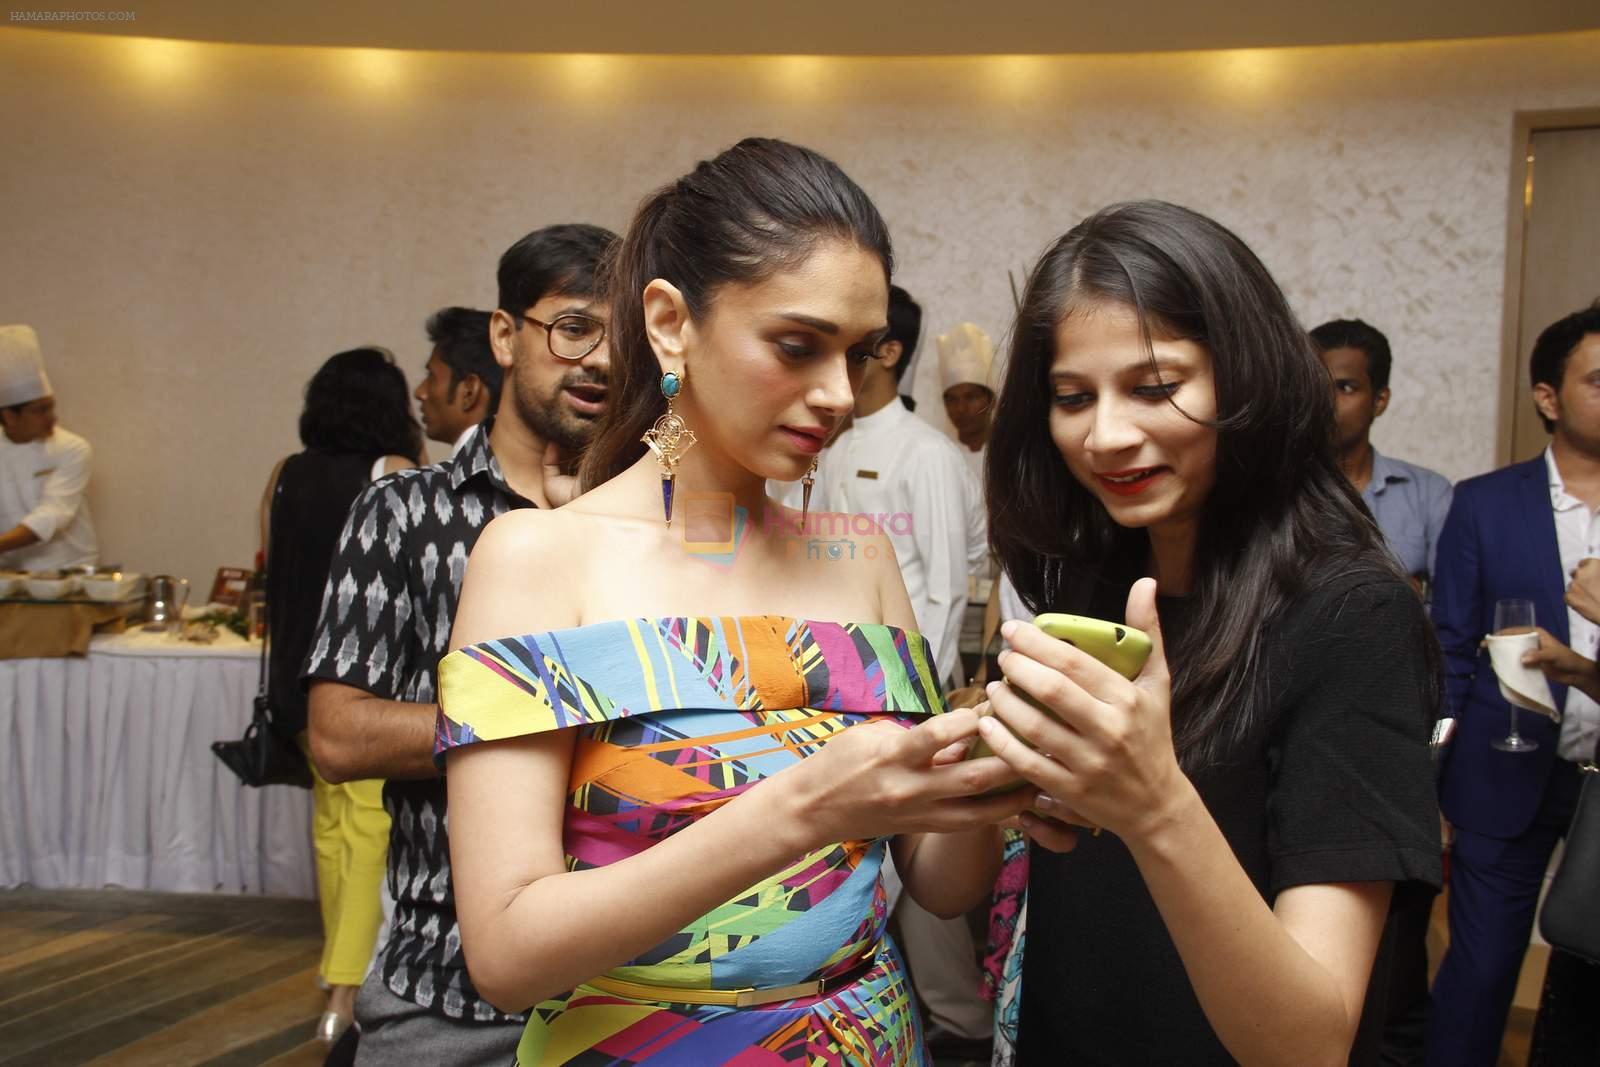 Aditi Rao Hydari at Elle Beauty Awards  in Trident, Mumbai on 1st Oct 2015